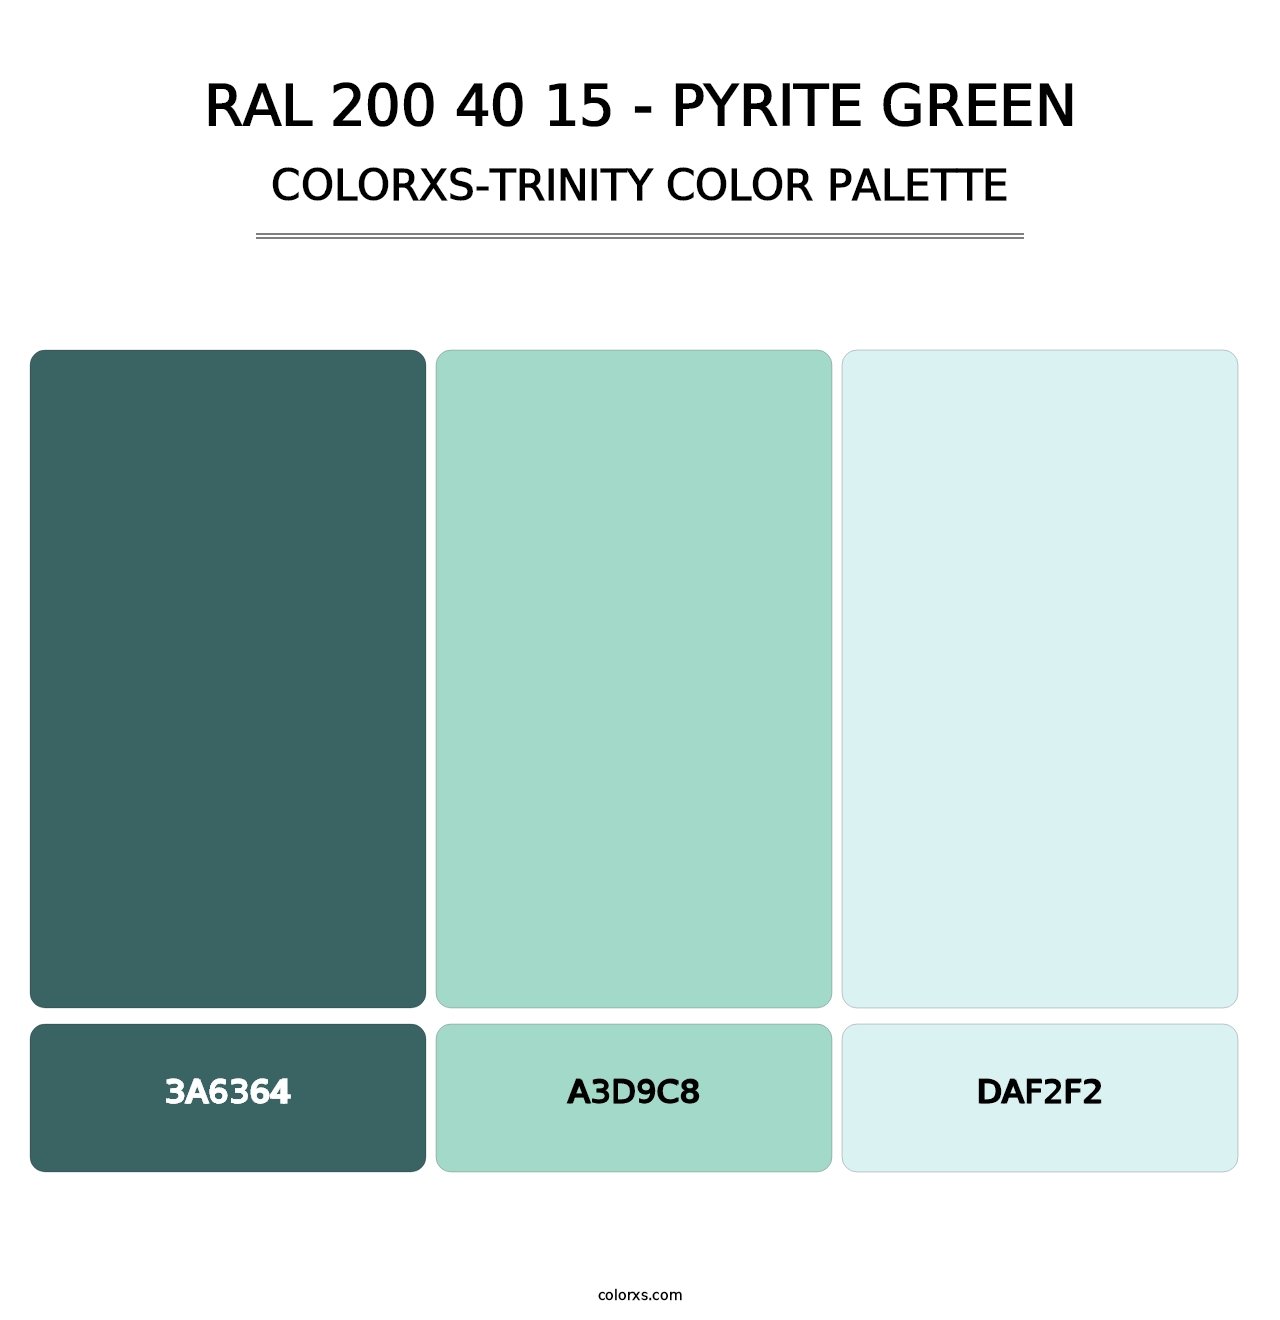 RAL 200 40 15 - Pyrite Green - Colorxs Trinity Palette